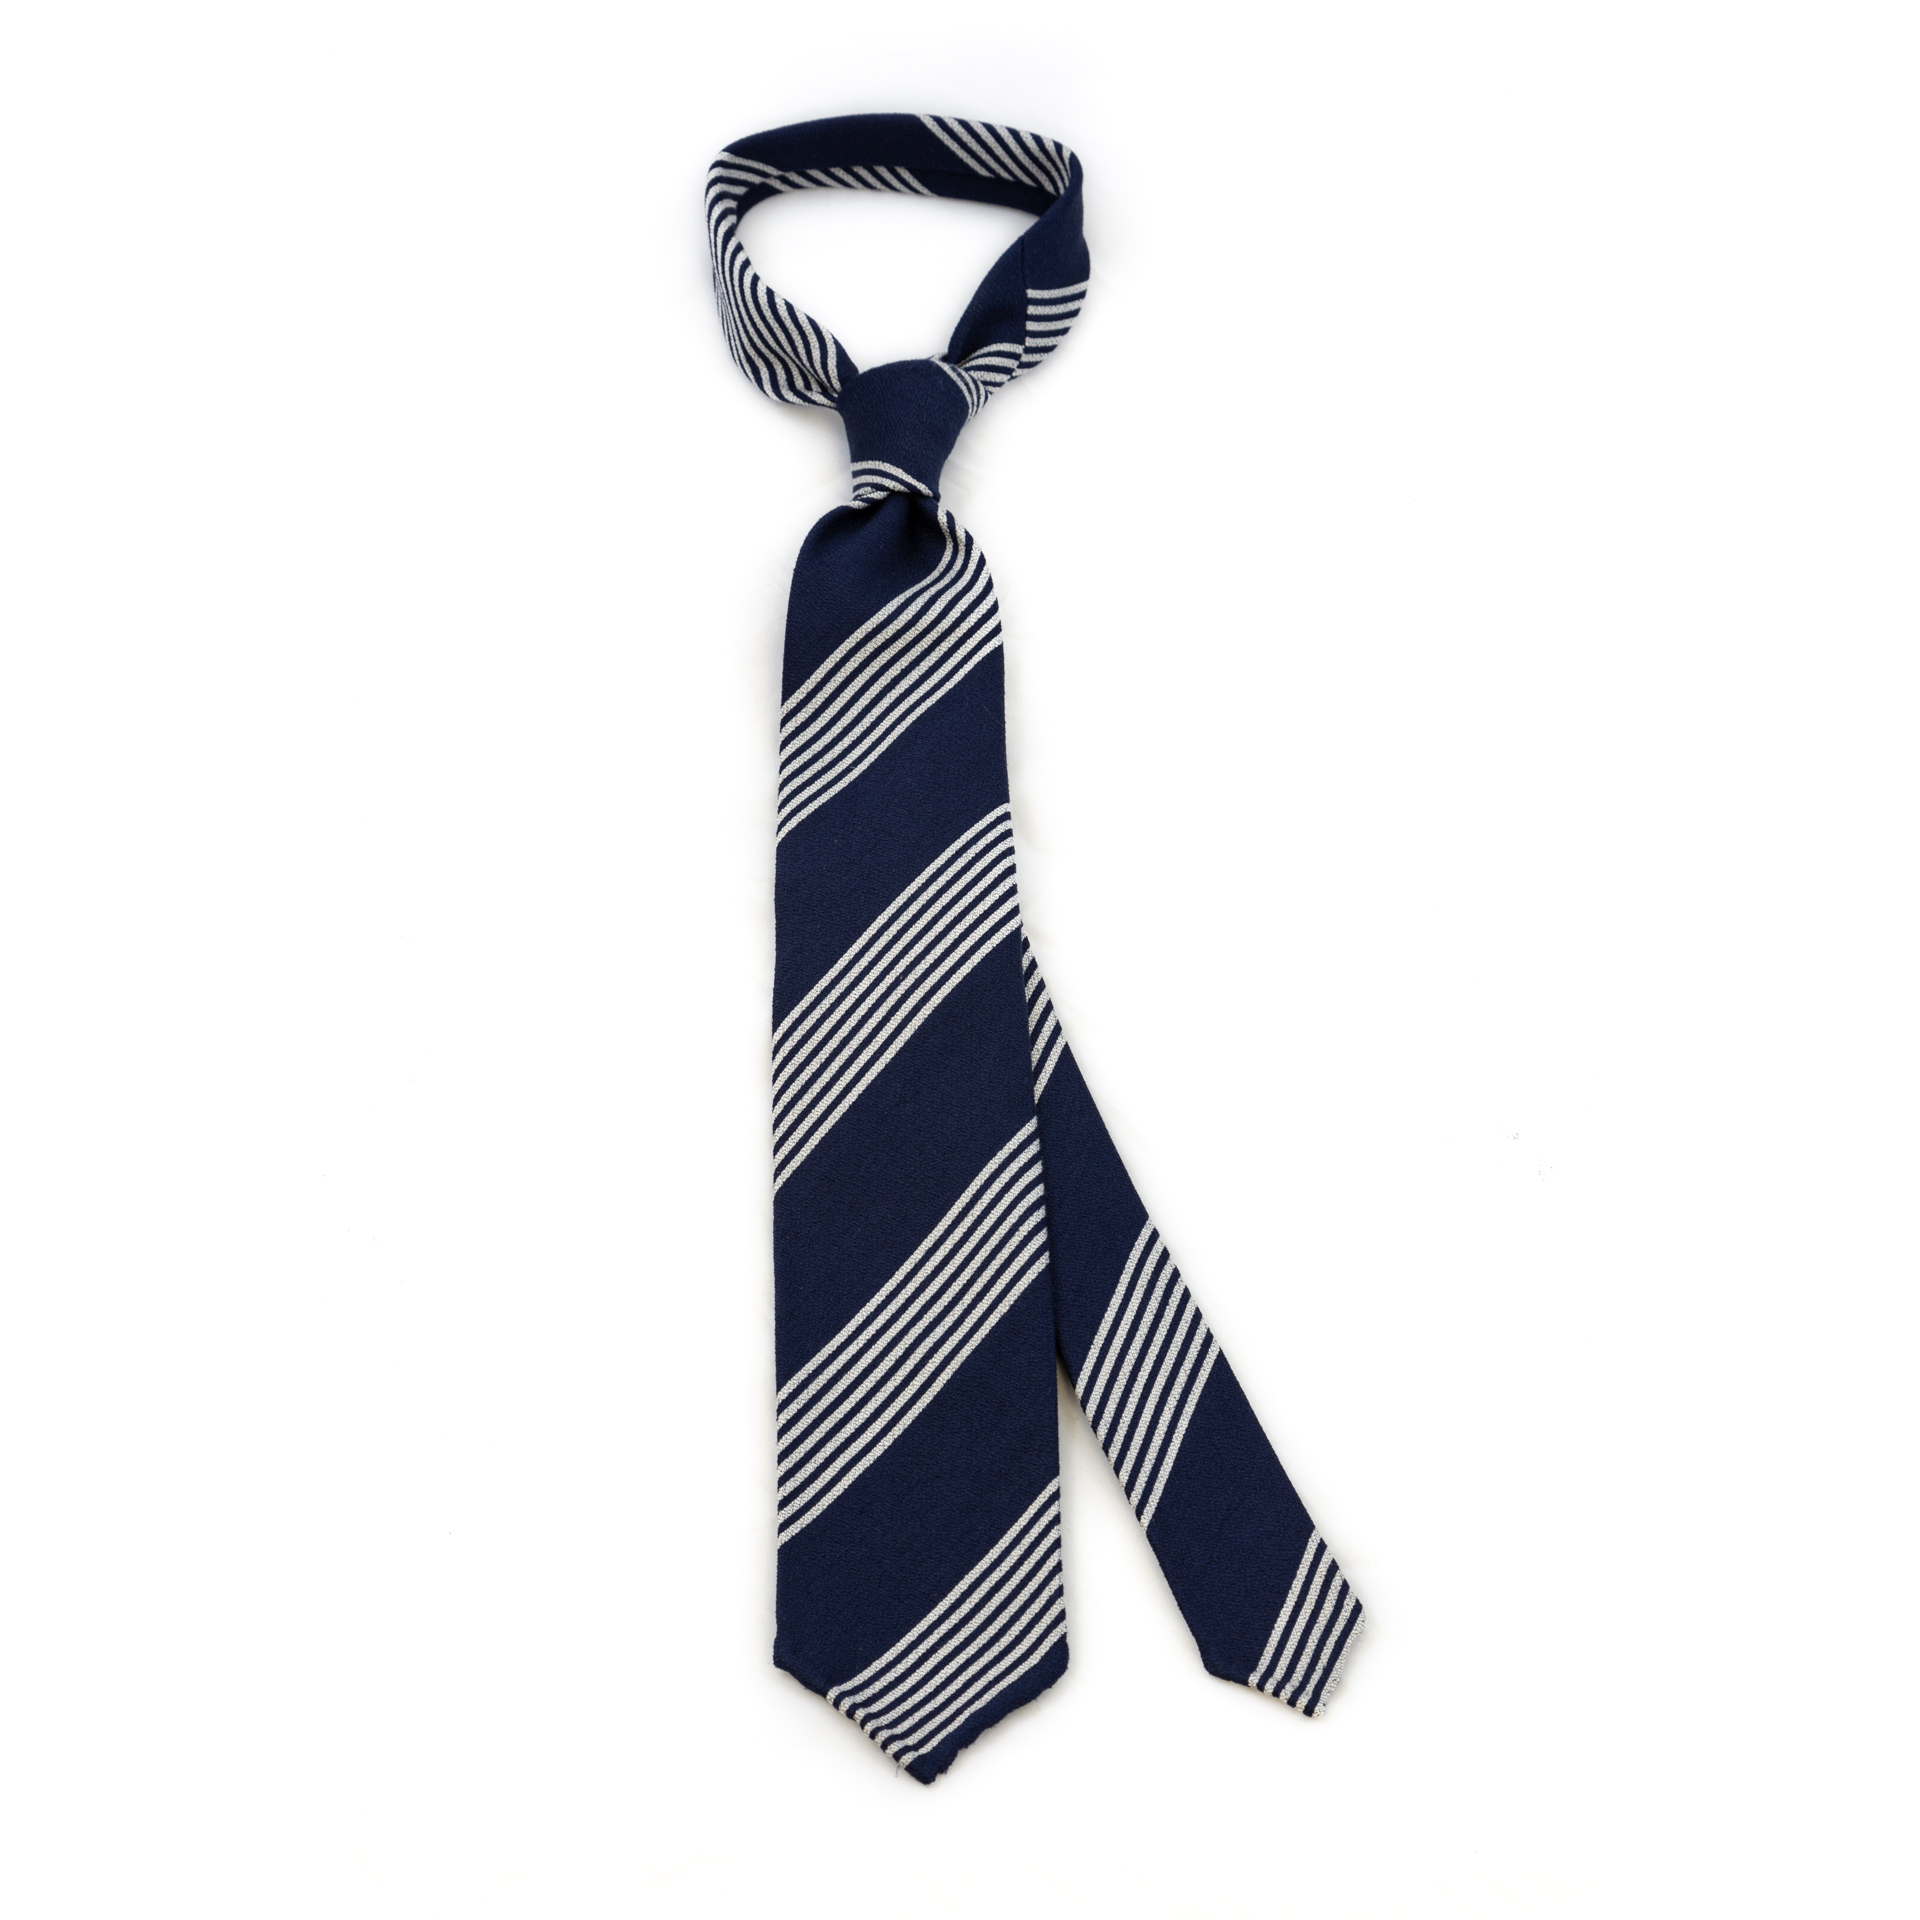 DLA 5-fold navy and white striped tie